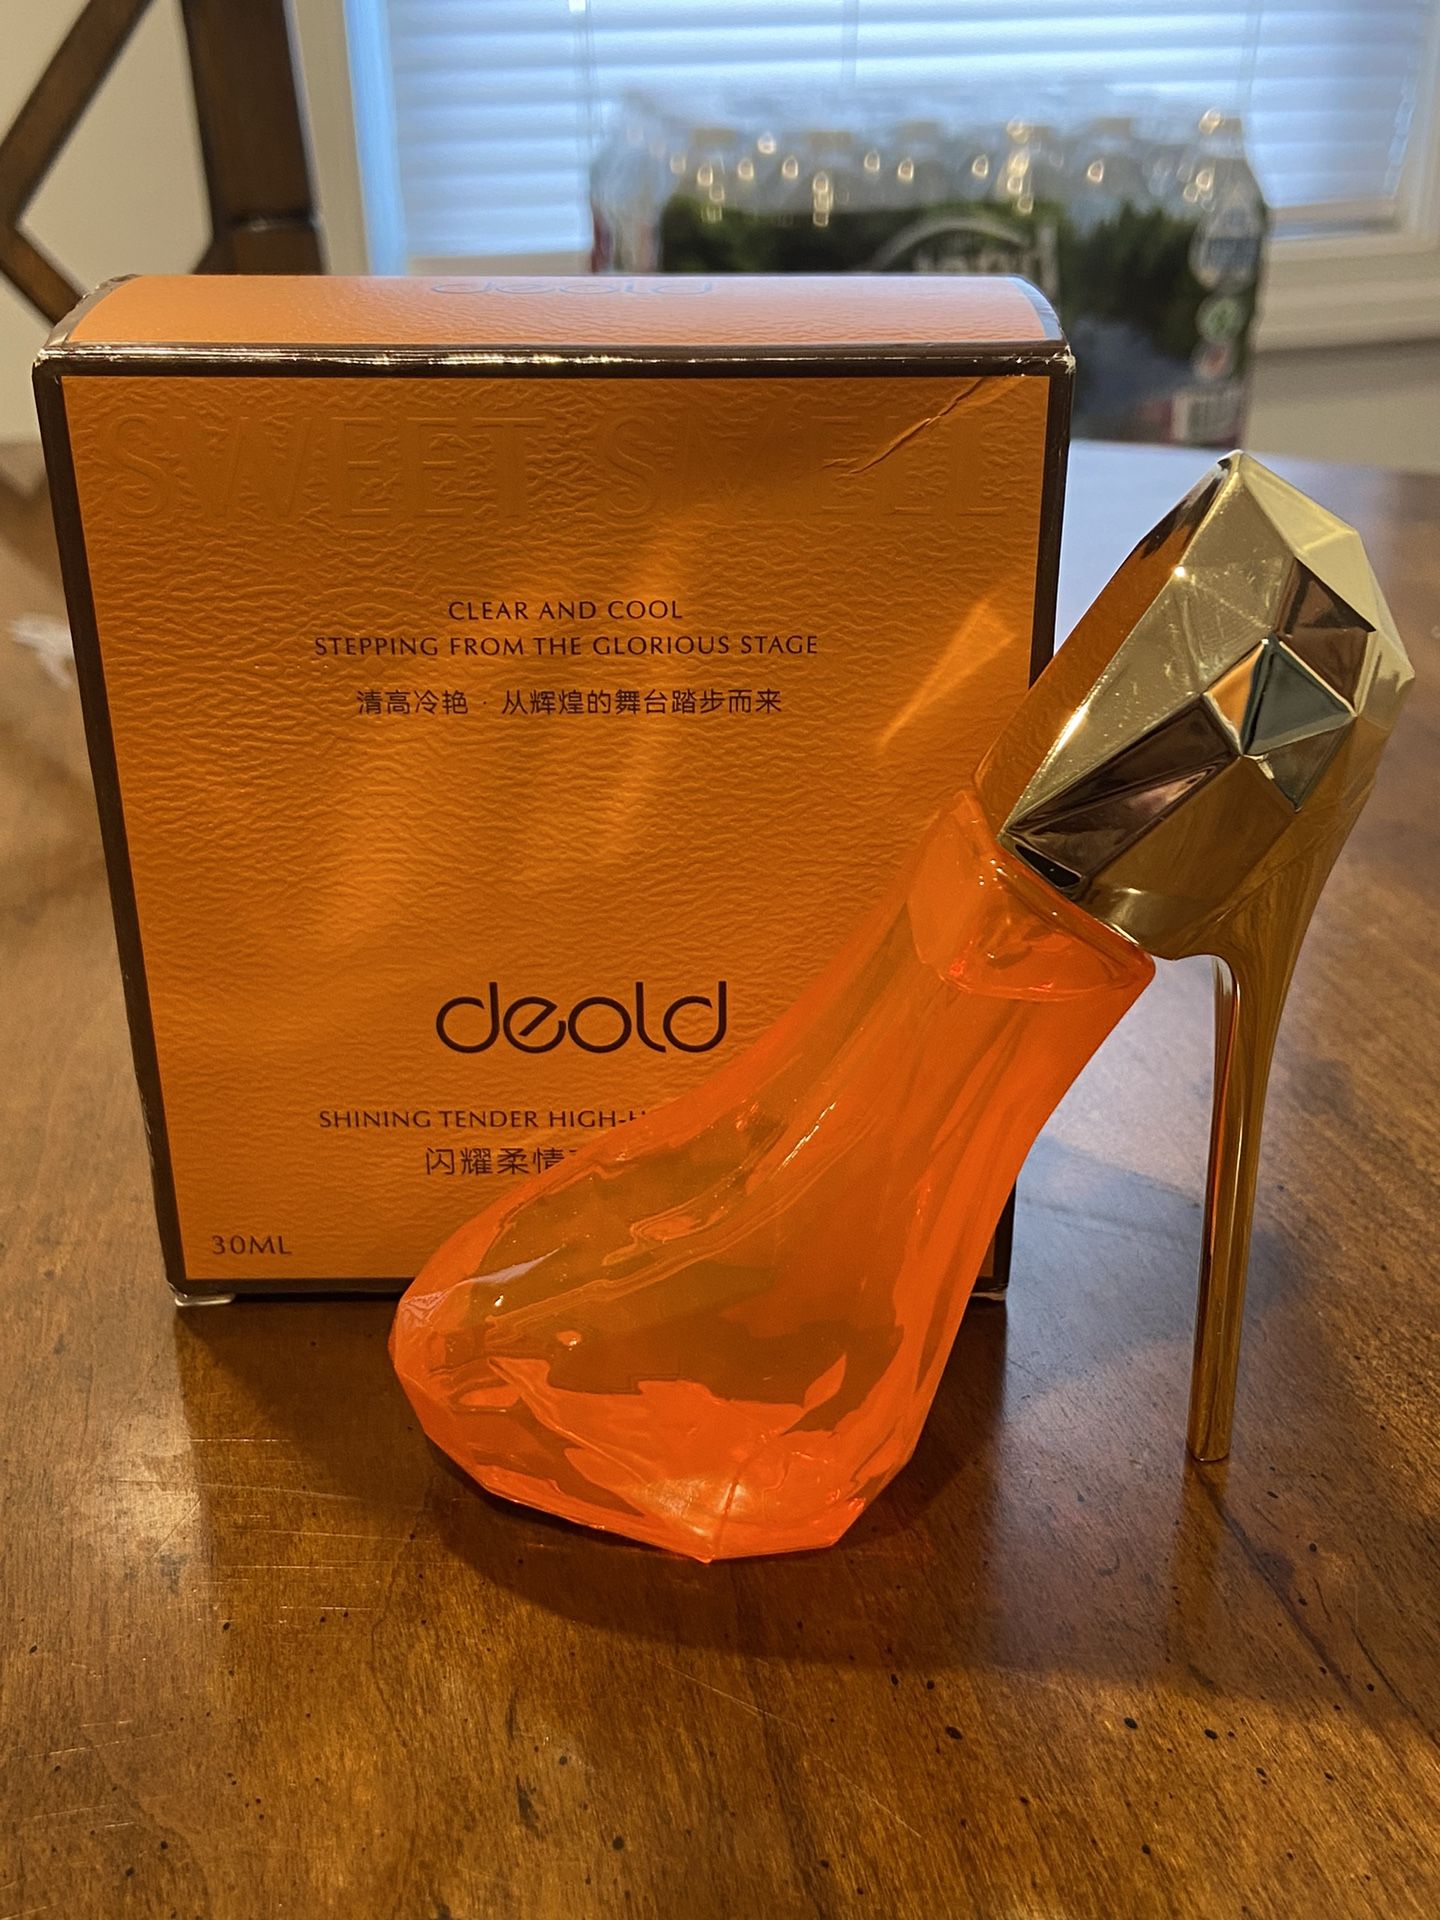 Orange high heel perfume